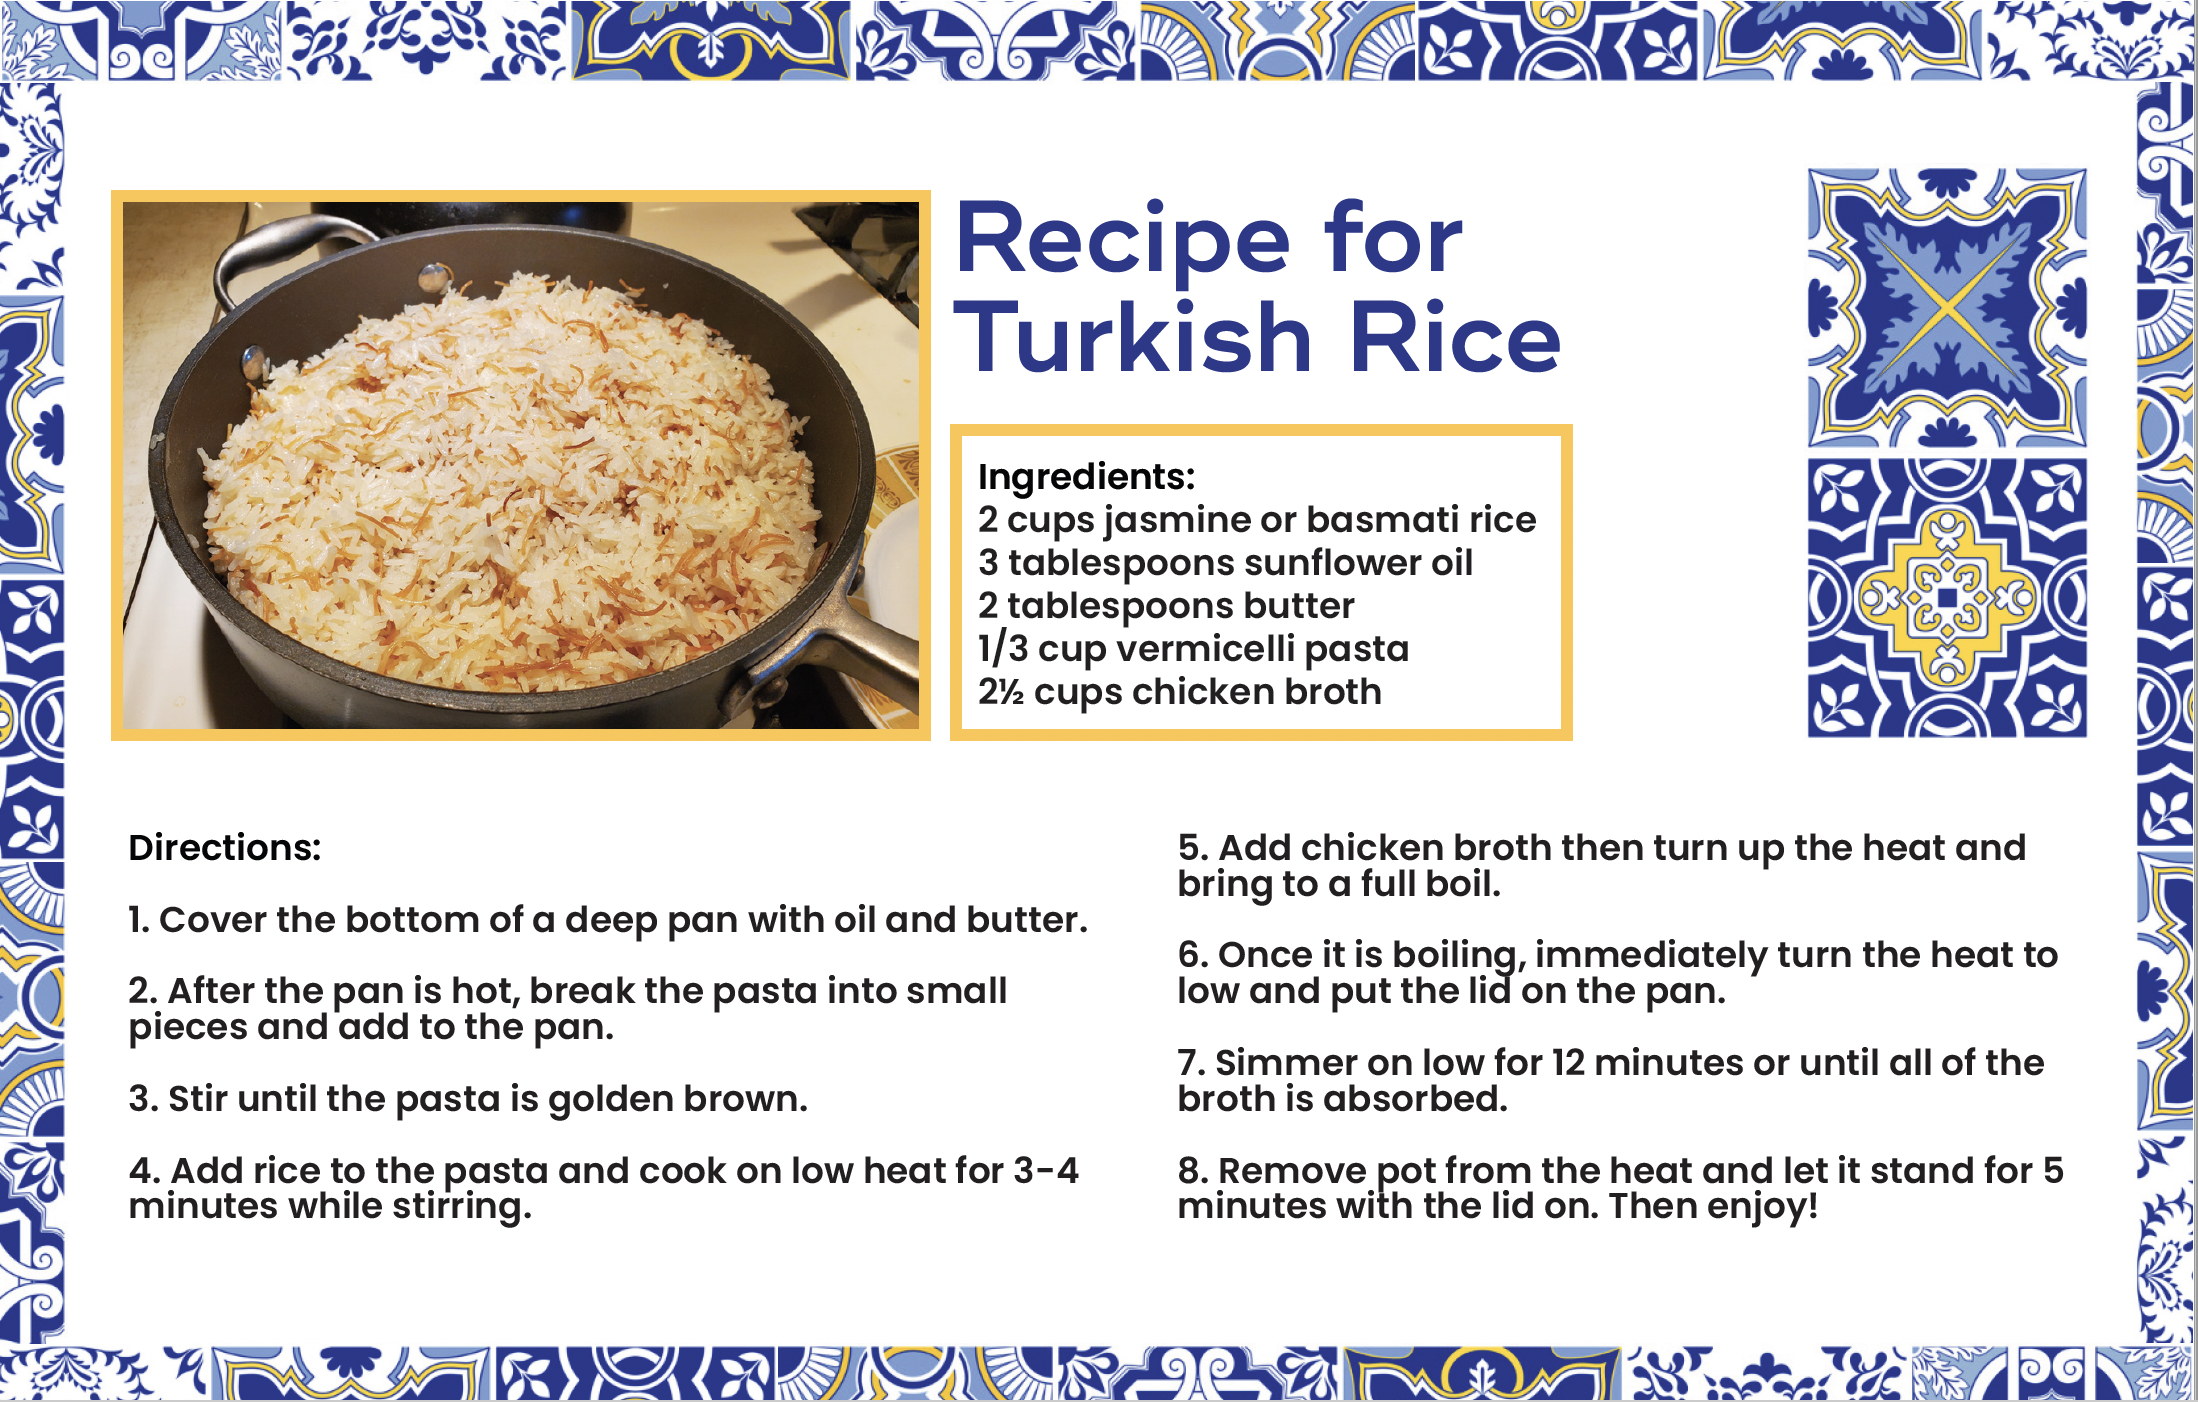 Recipe card for Turkish Rice